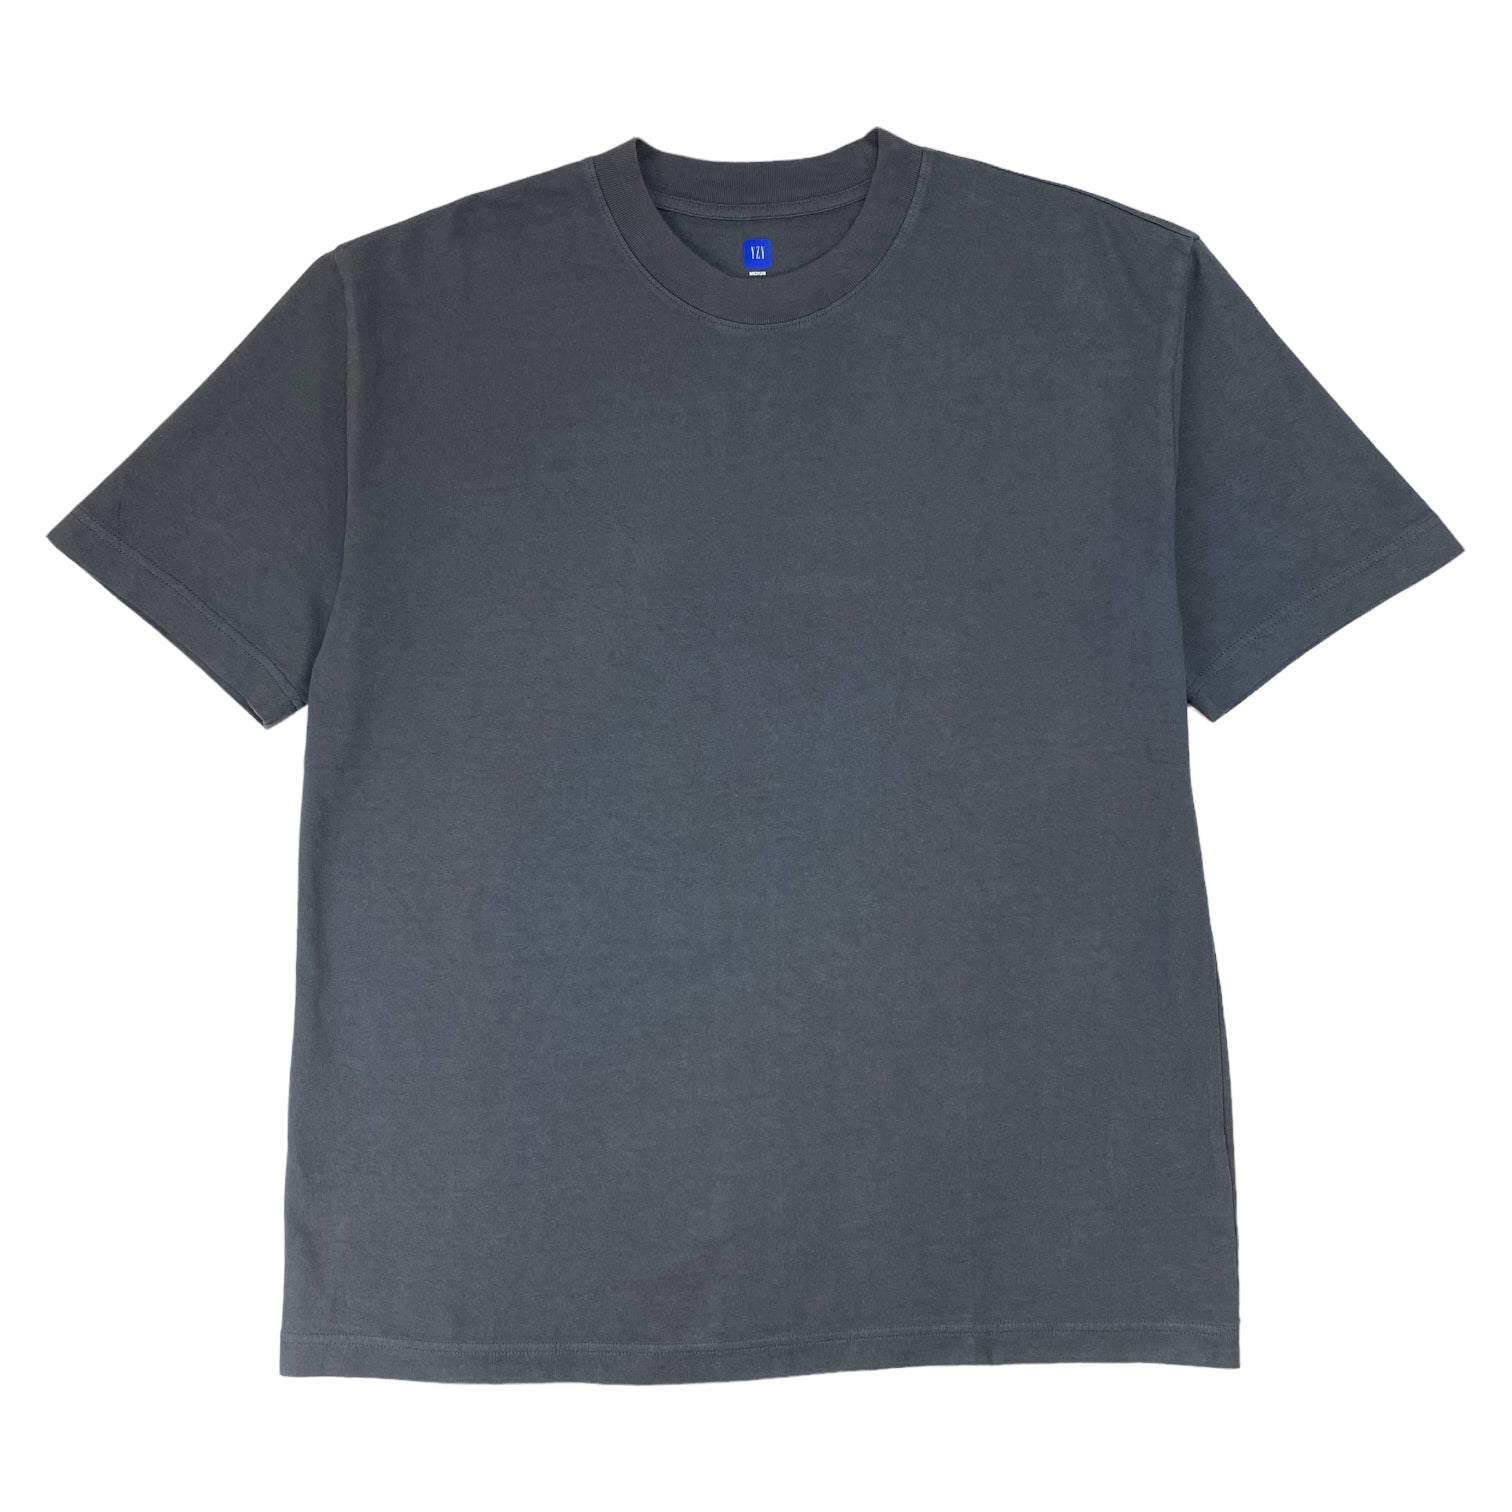 Yeezy x Gap Dark Grey Unreleased Shirt - Dark Grey Shirt